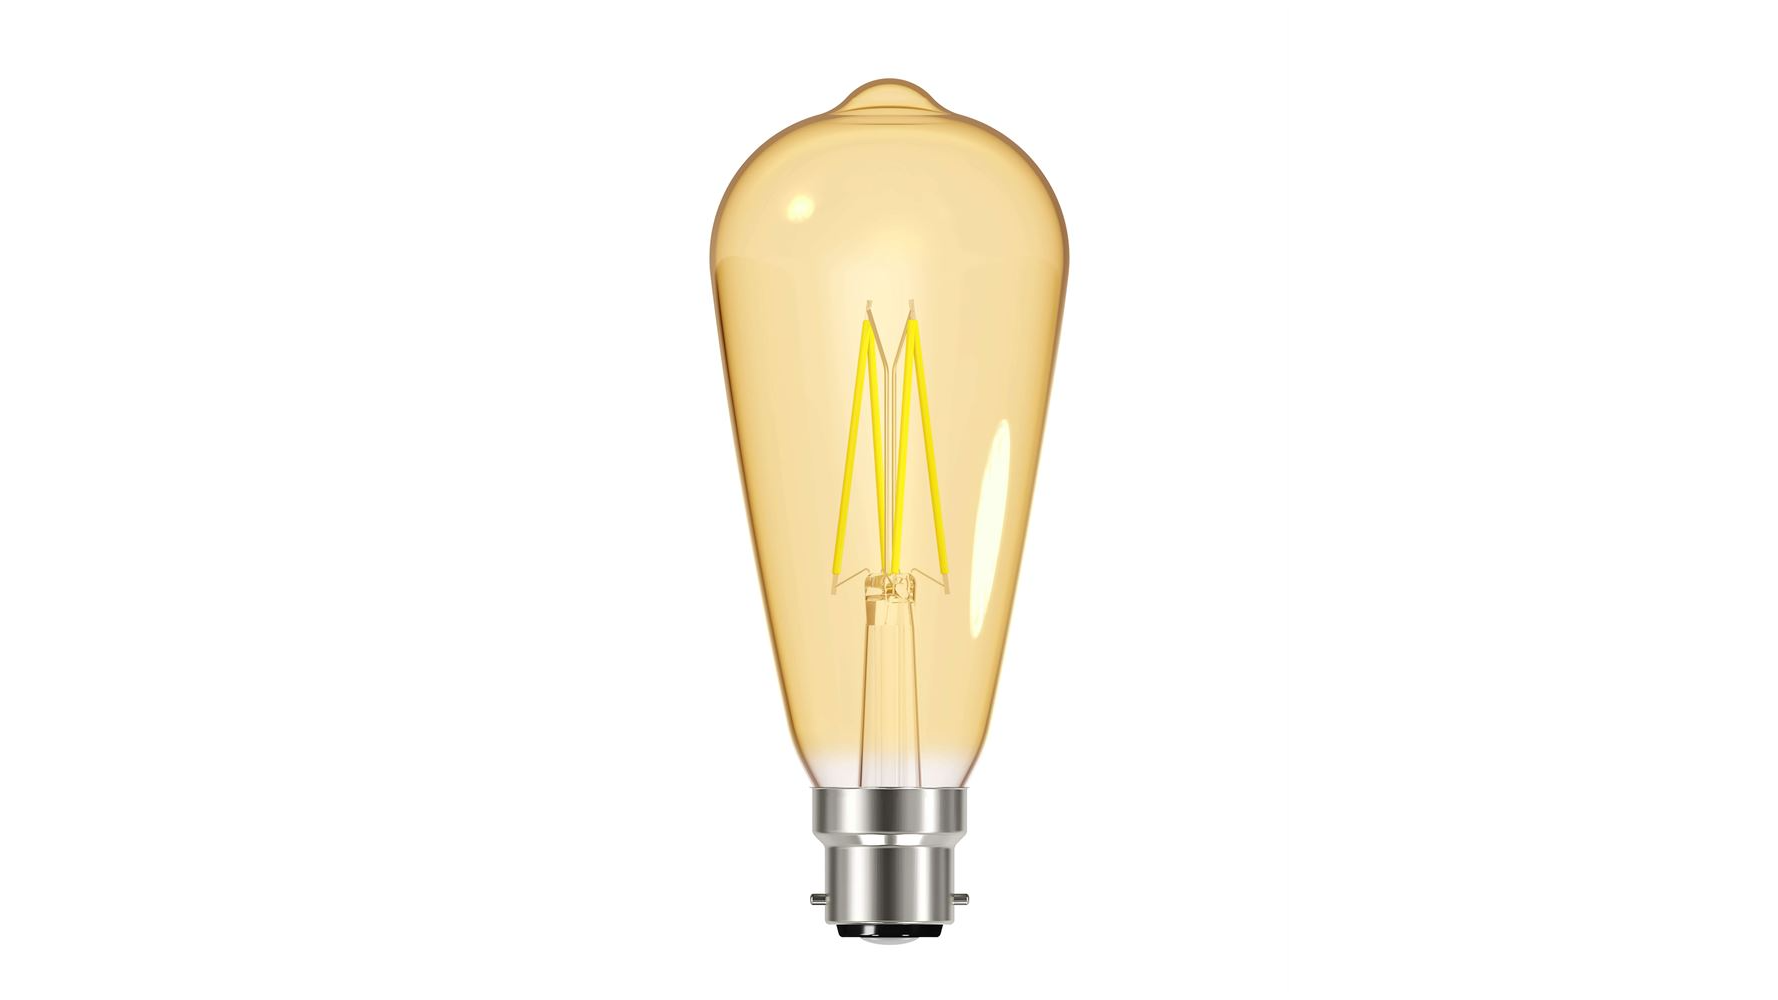 Filament Gold Tear Drop ST64 LED lamp B22 - 5W - 2200K (Warm White)